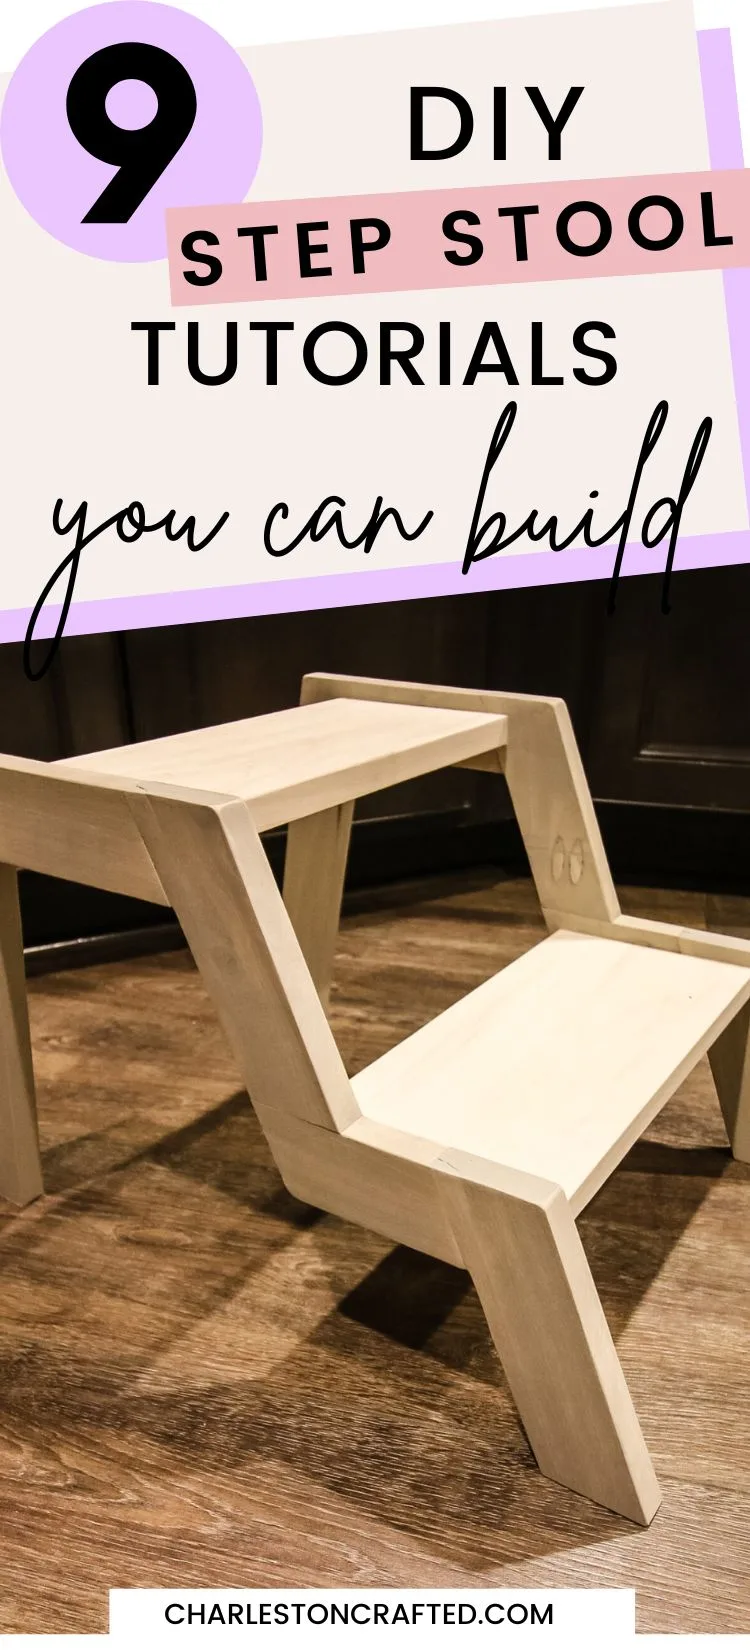 9 diy step stool tutorials you can build